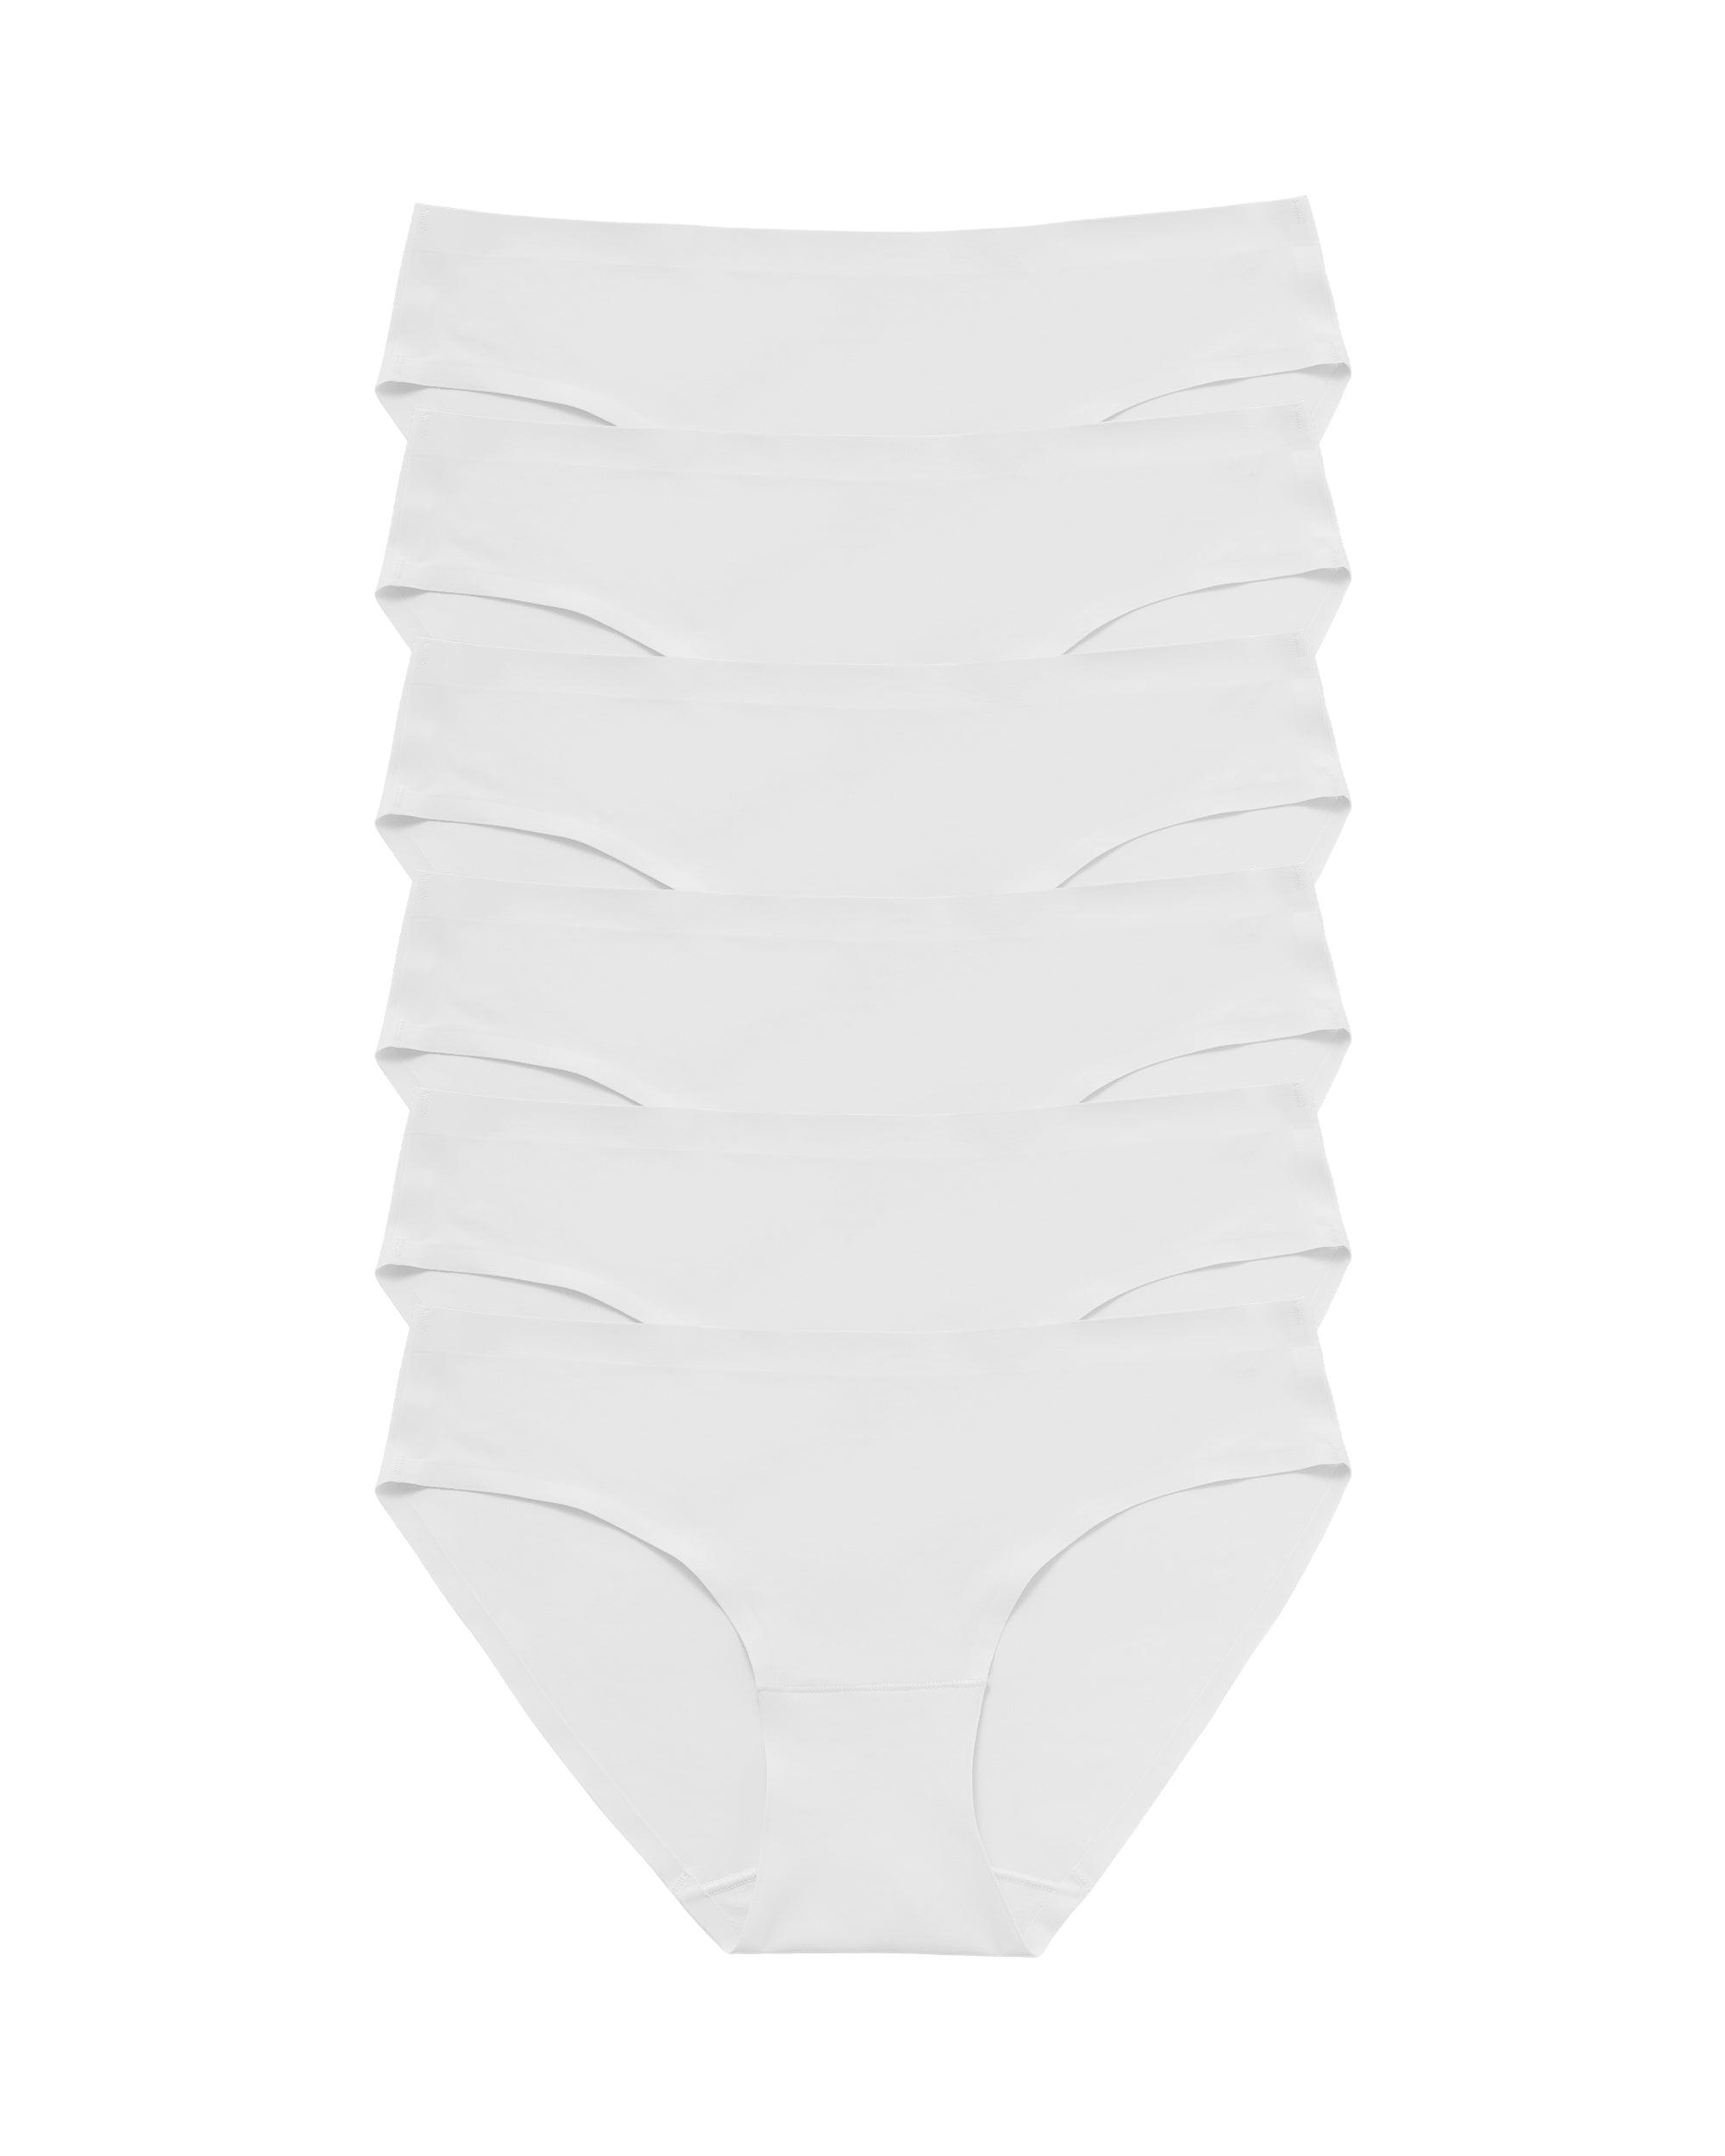 Altheanray Cotton Seamless Bikini - c